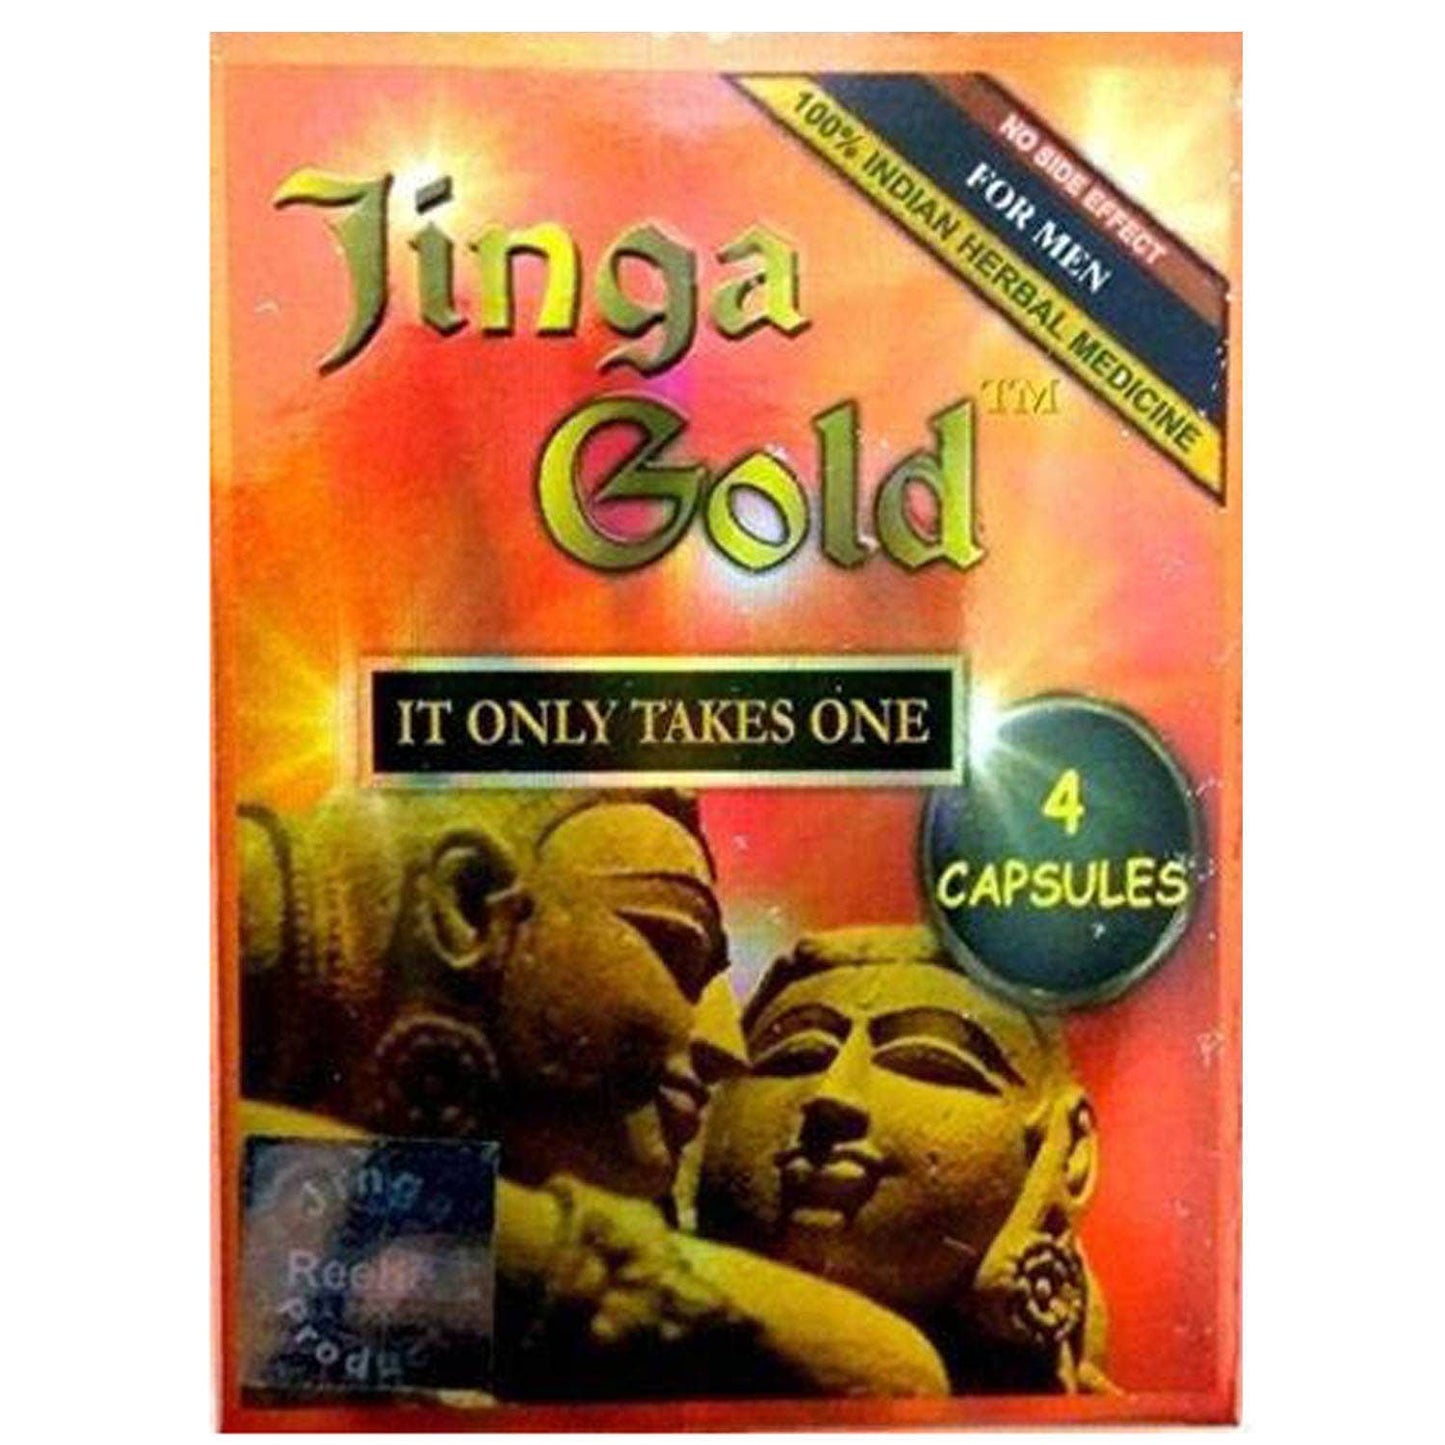 Reeha Herbal Jinga Gold Capsules